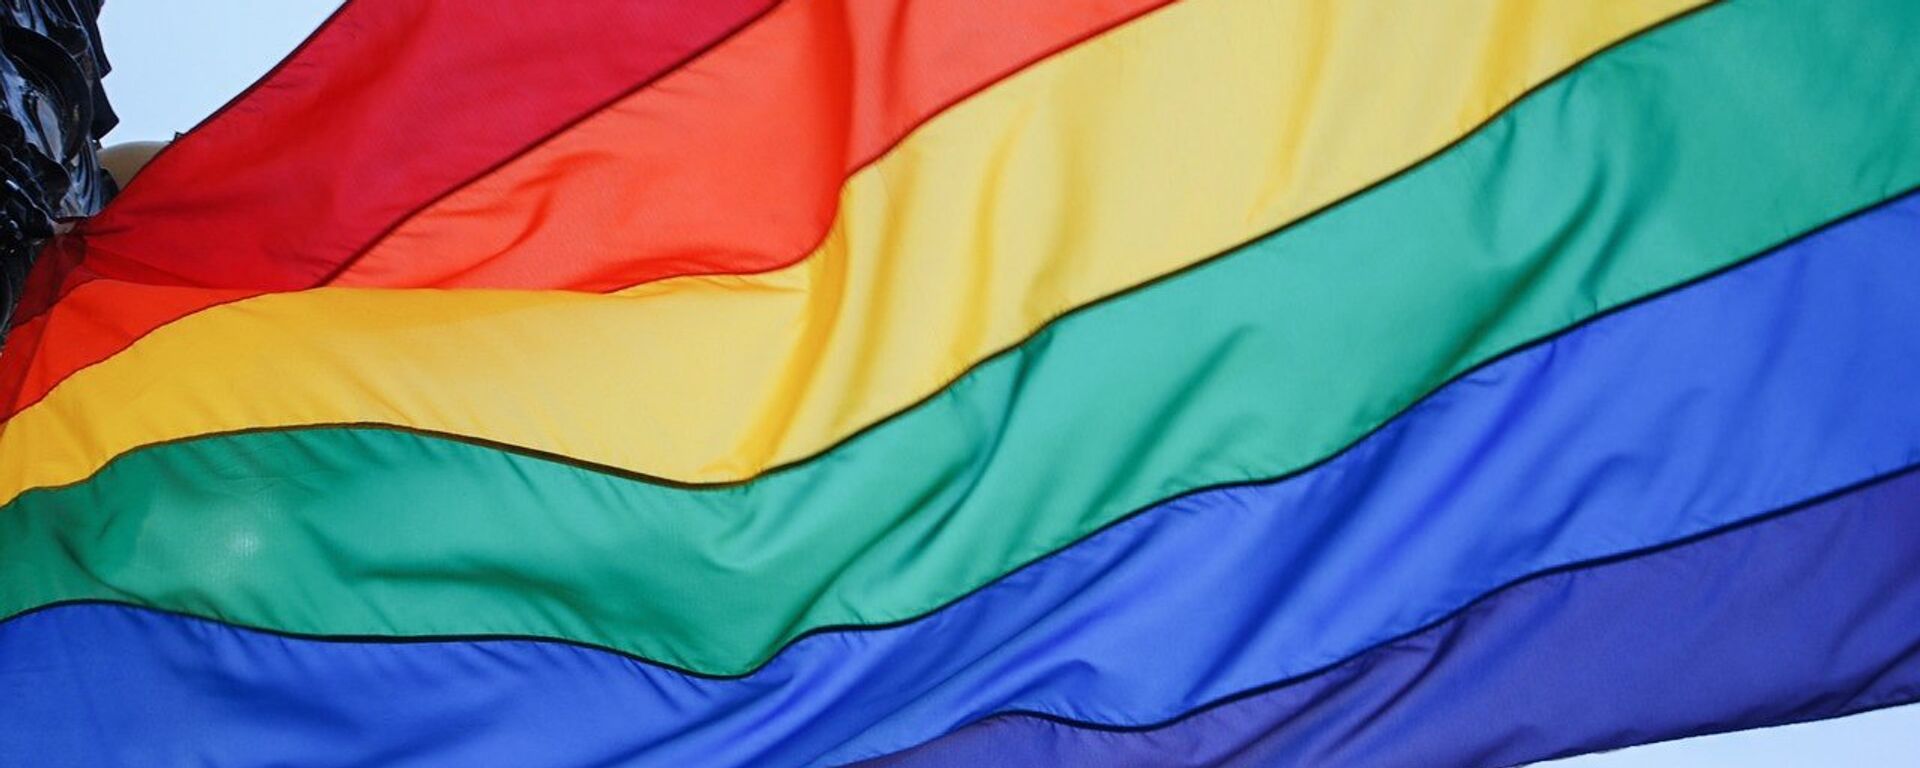 Bandera arcoíris, símbolo del movimiento LGBT - Sputnik Mundo, 1920, 24.06.2020